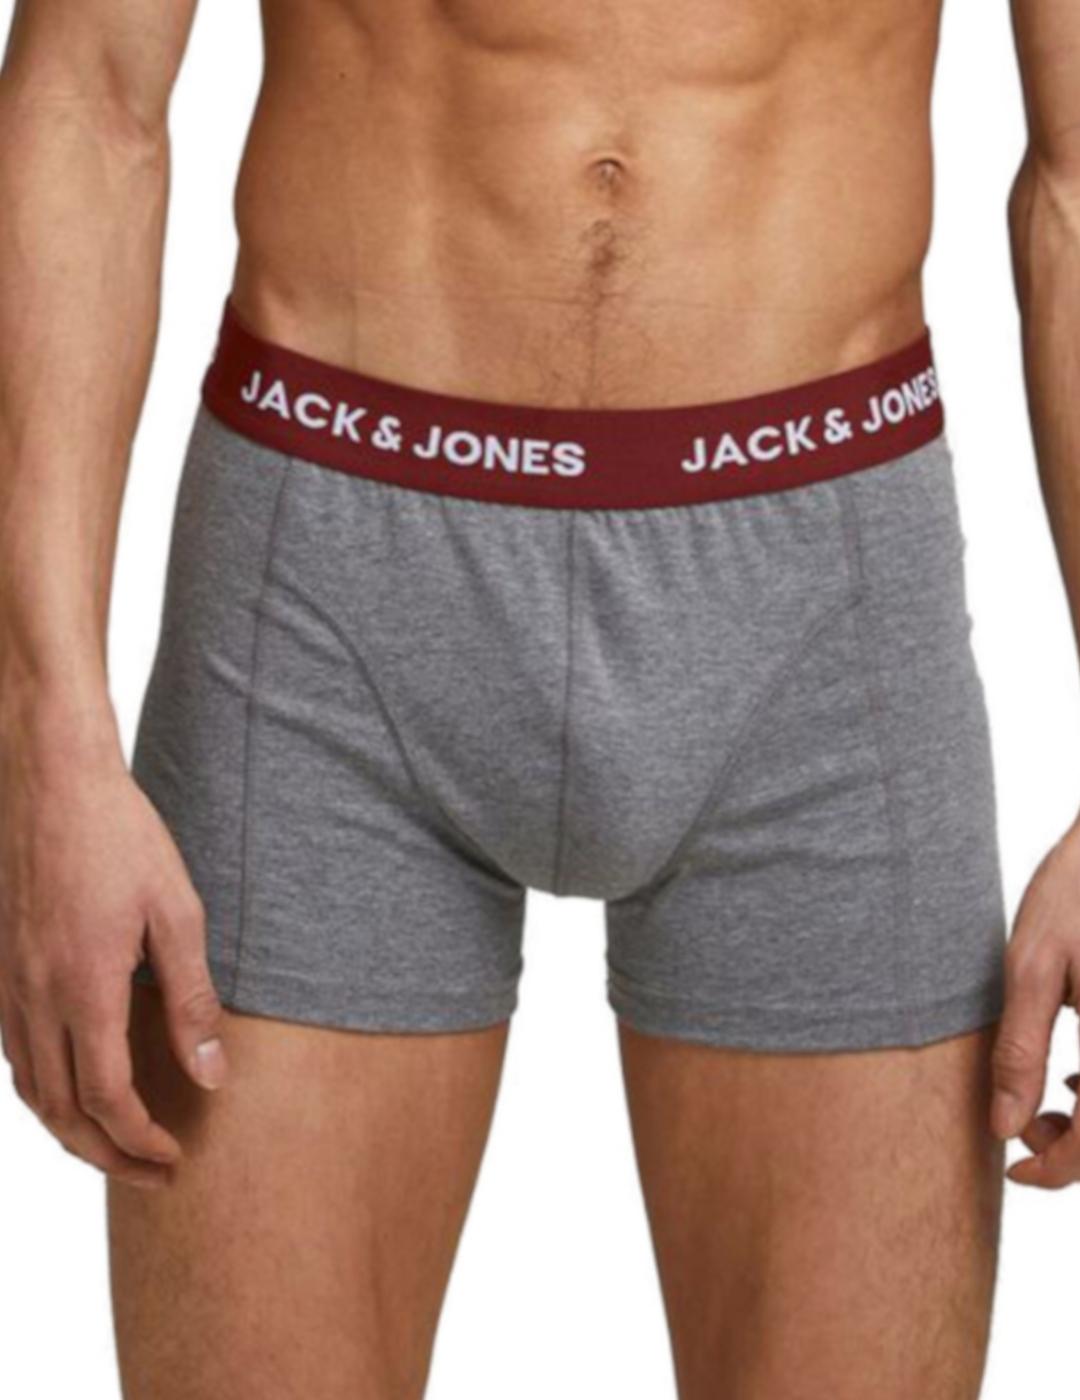 Intimo Jack-Jones Jacred pack3 floreados hombre -z